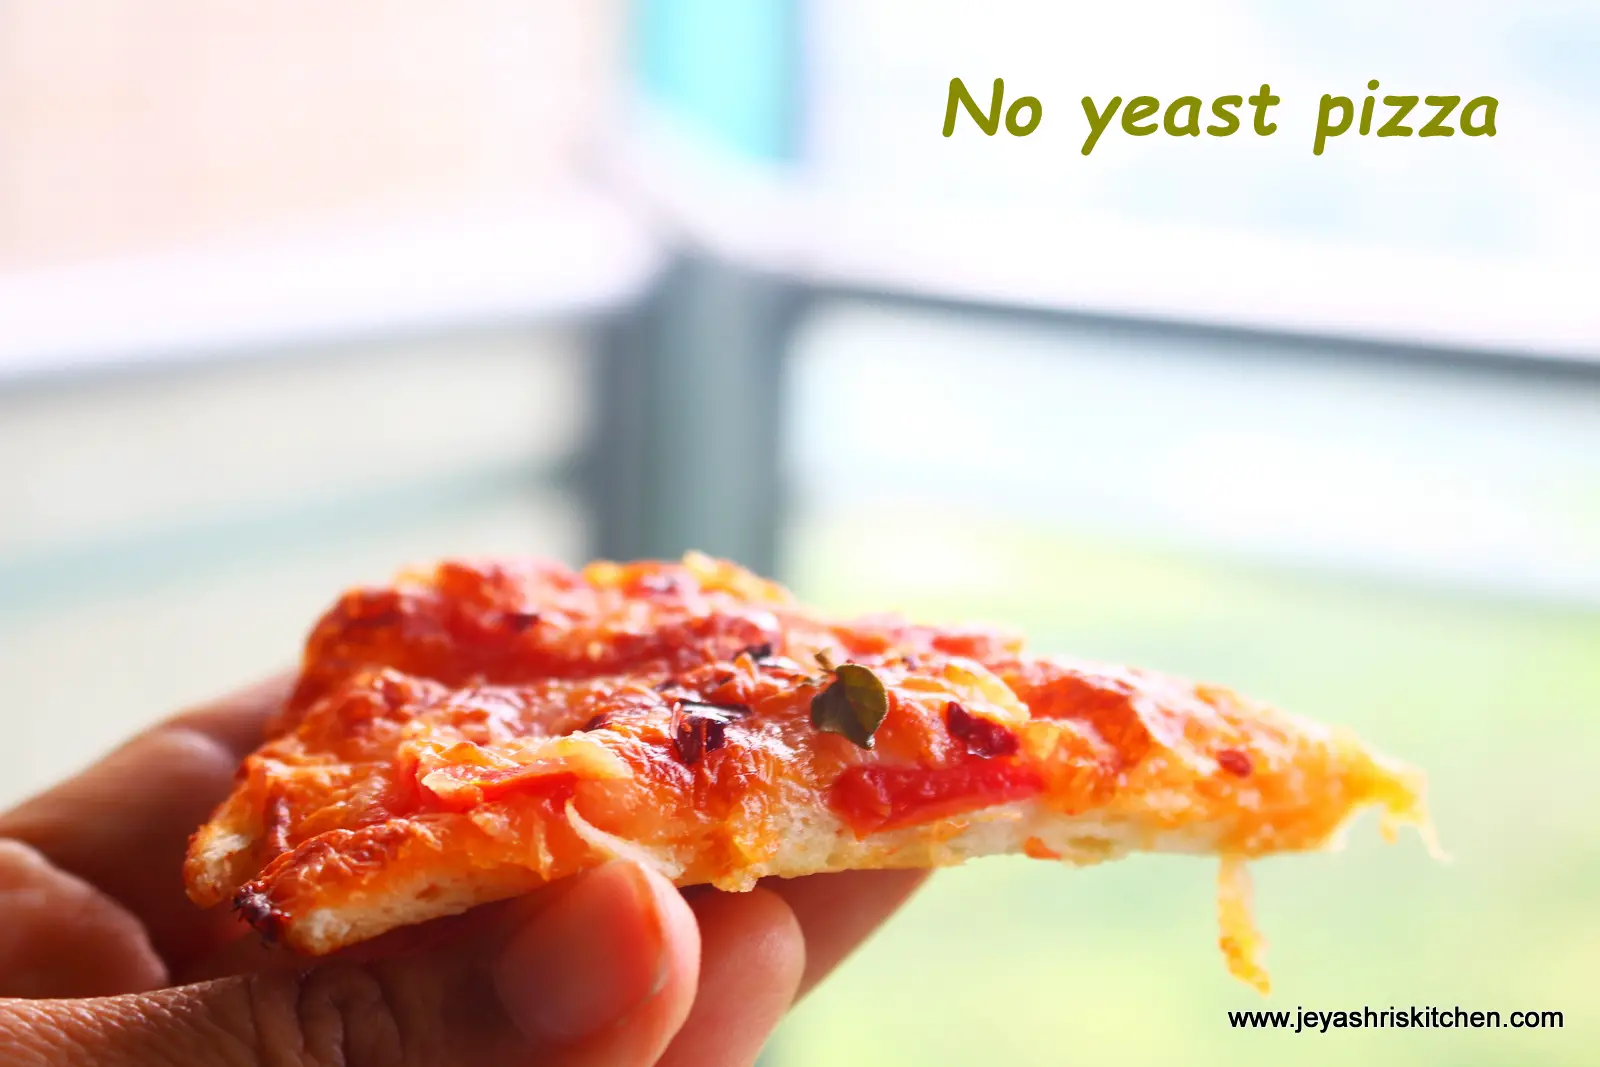 No yeast pizza dough